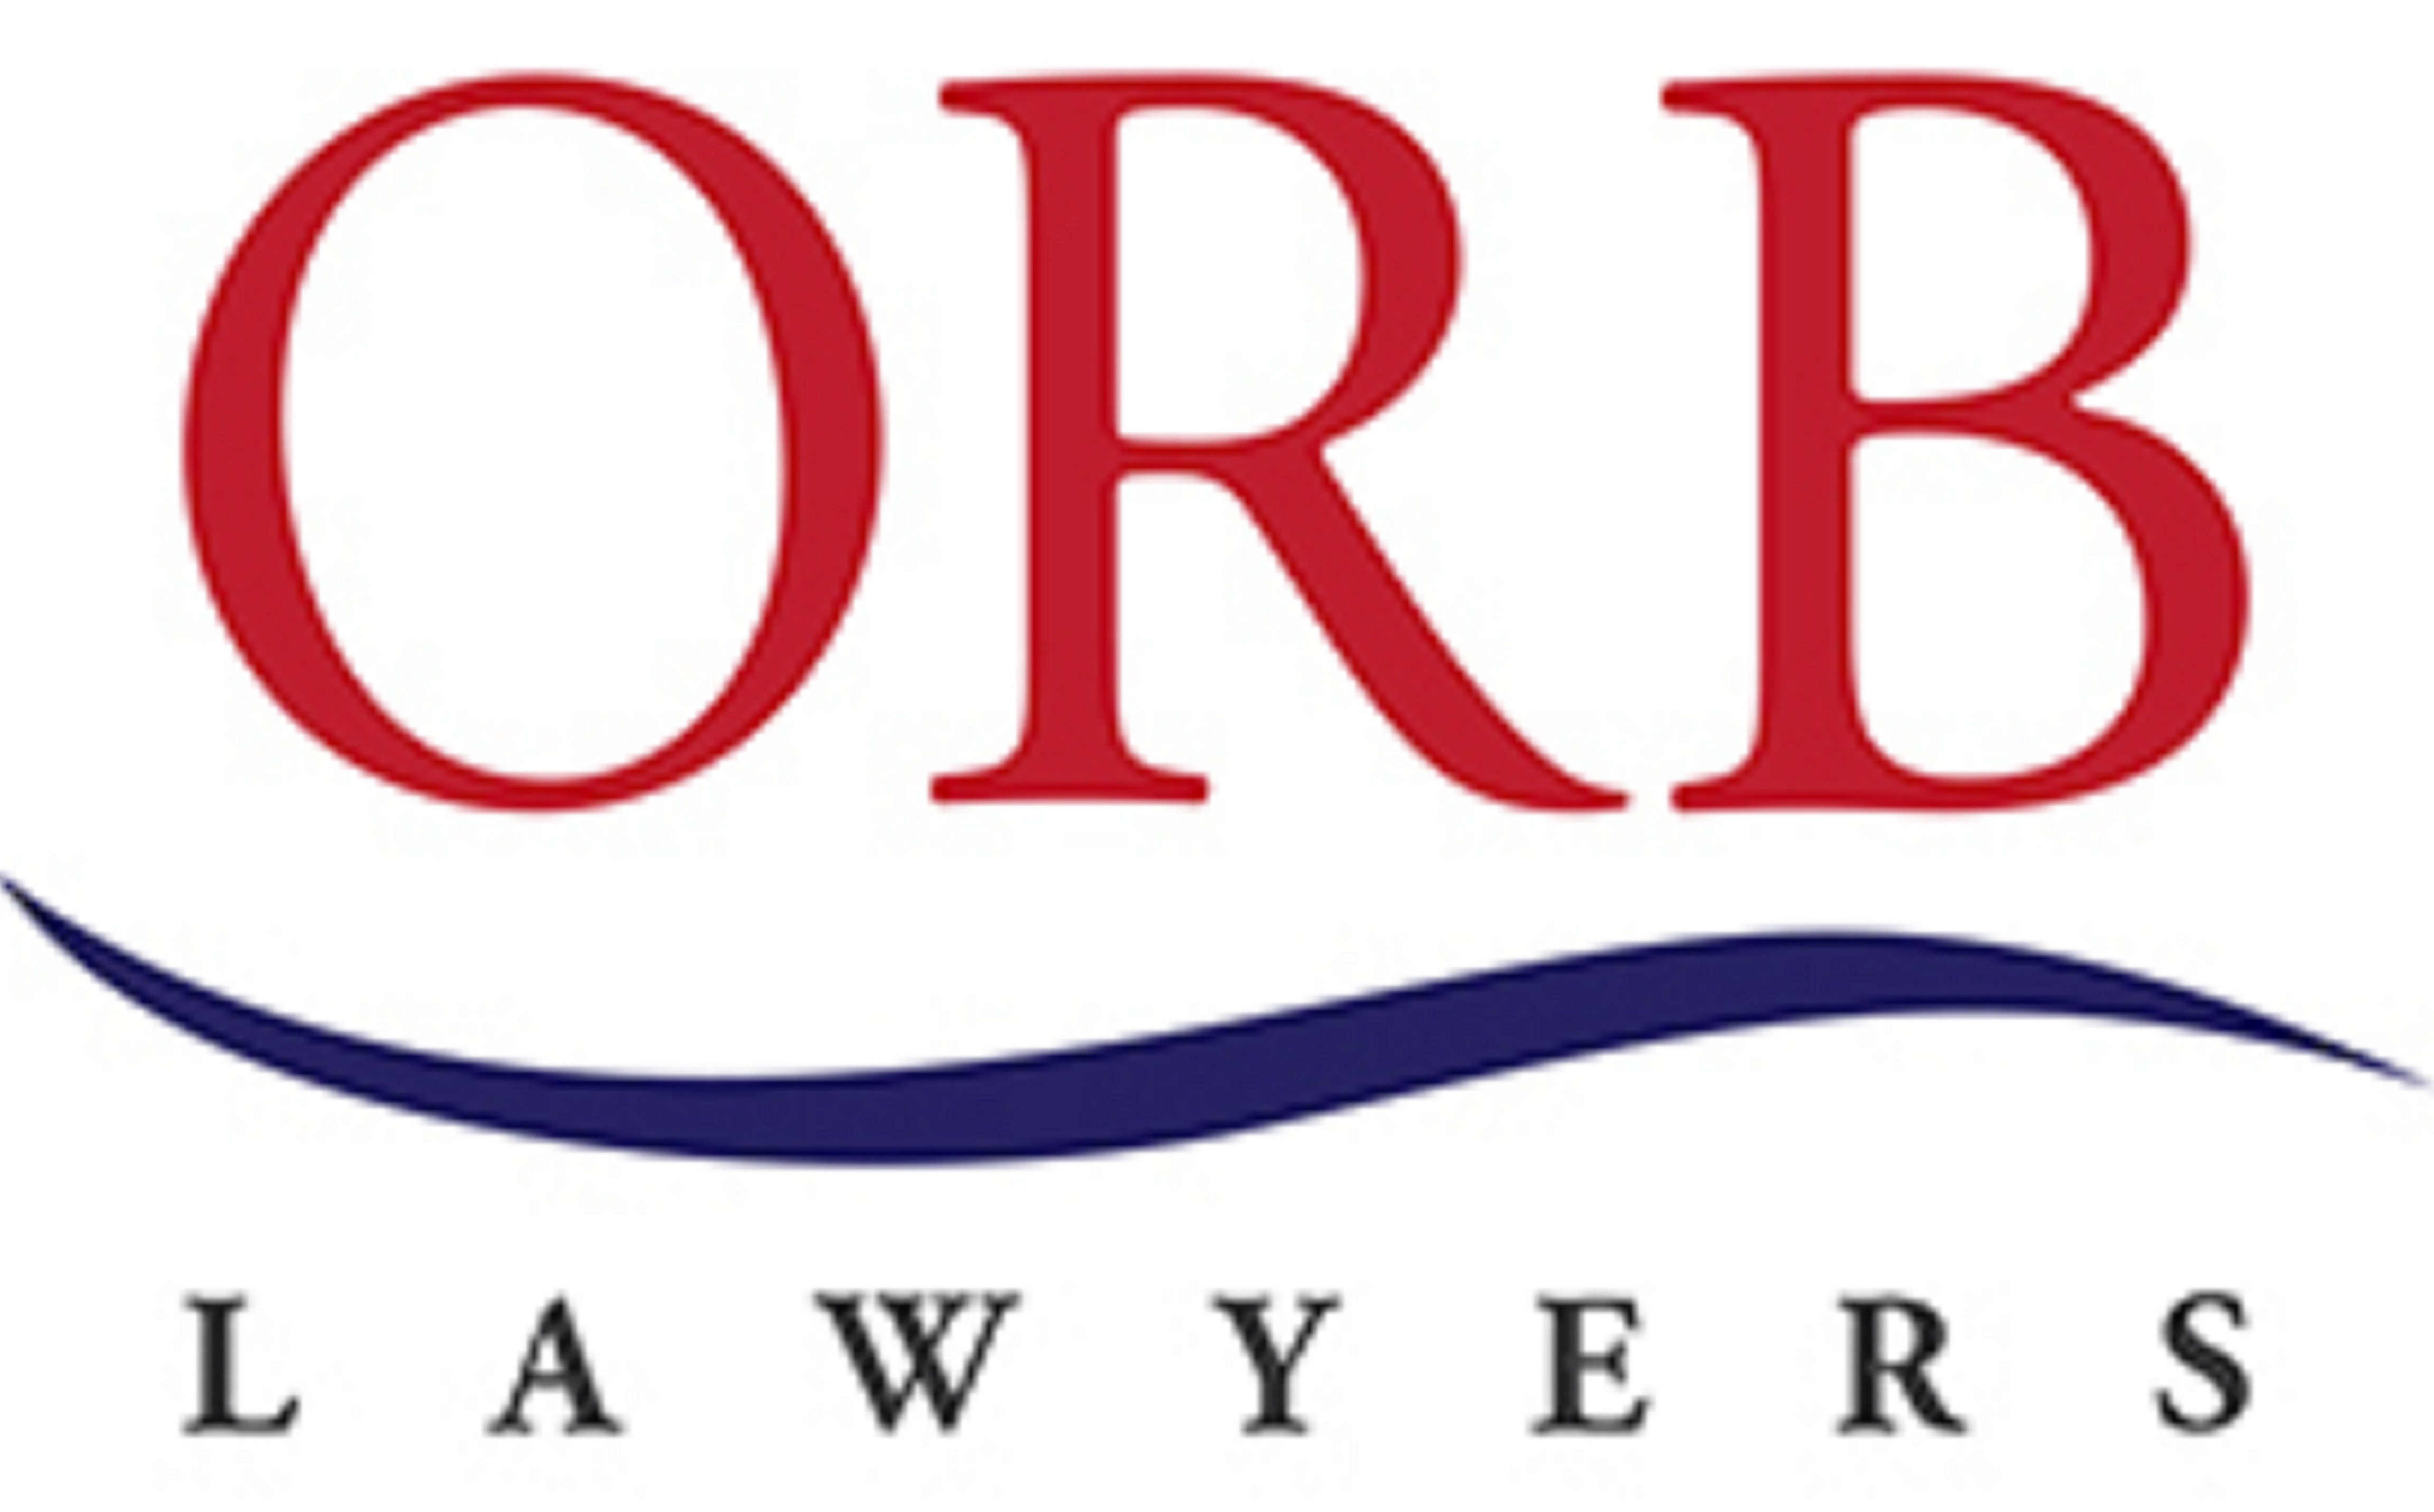 ORB lawyers